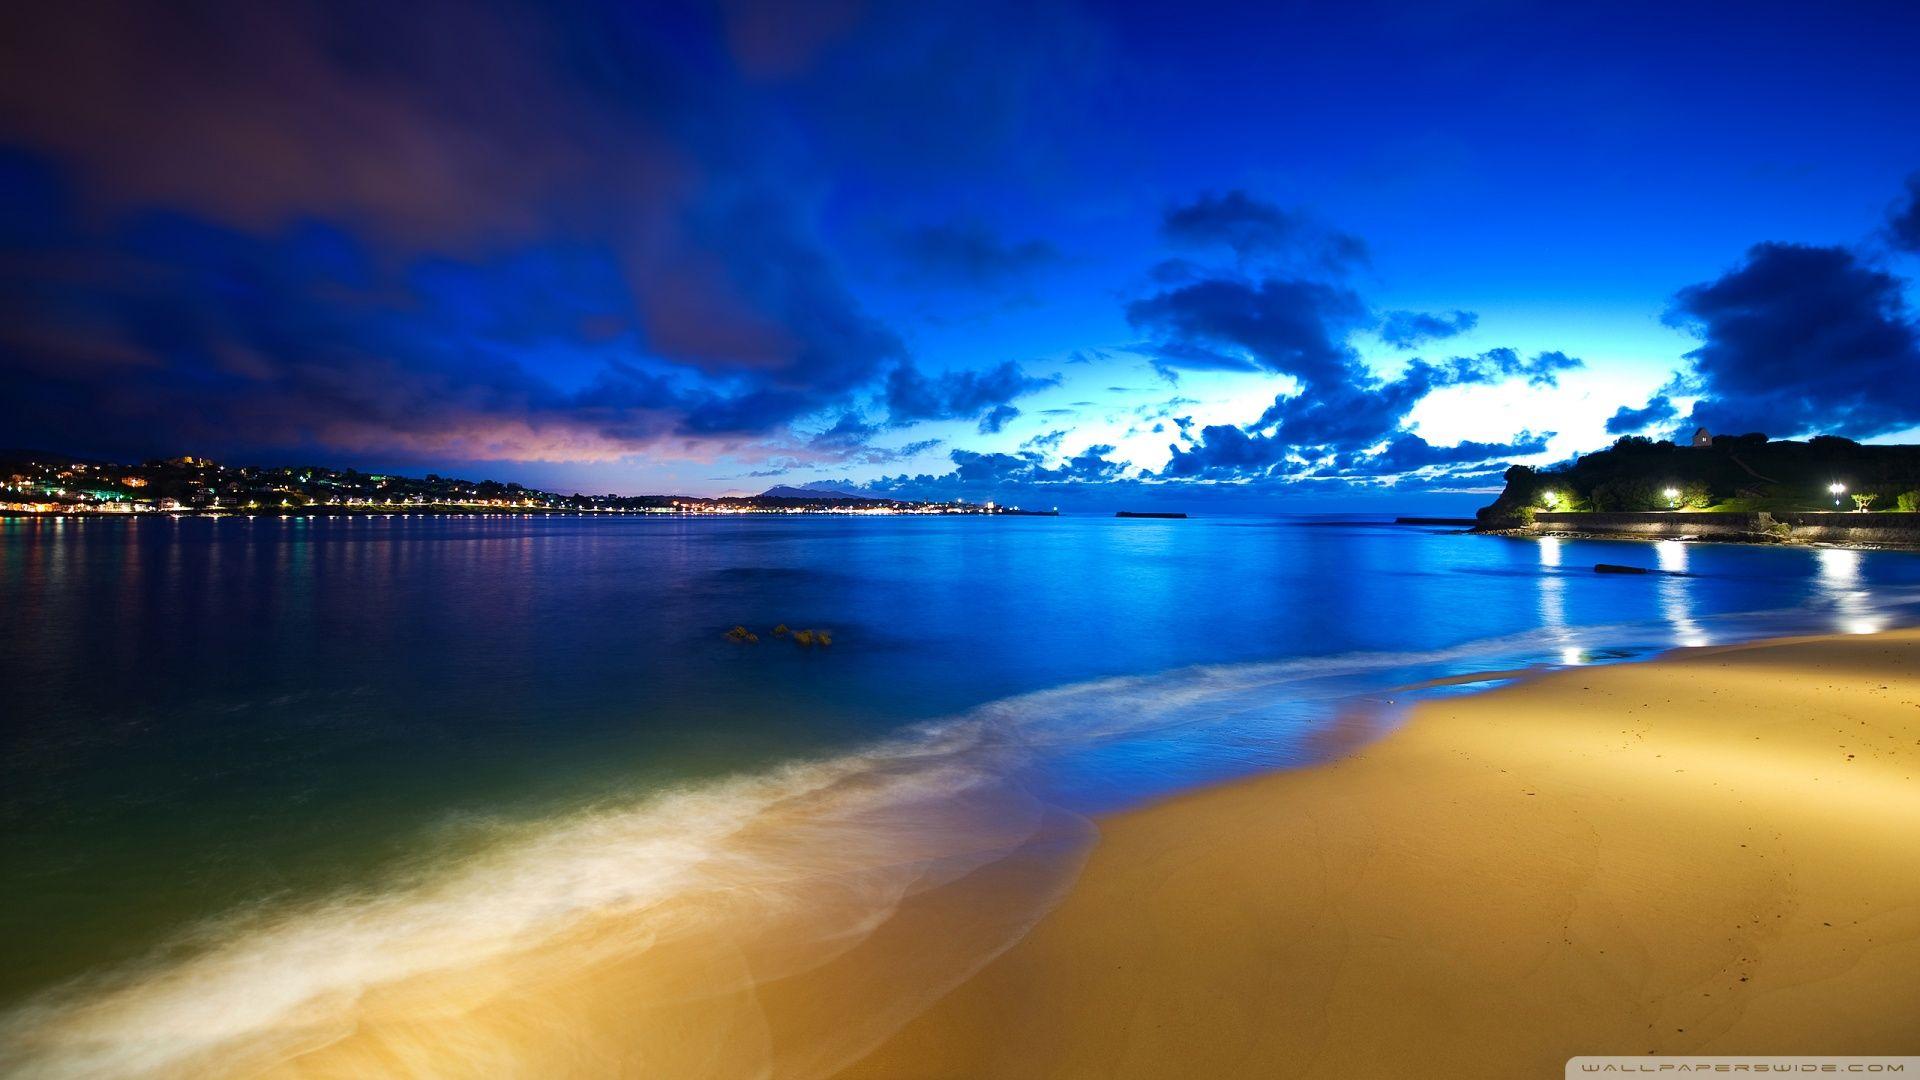 Ocean HD desktop wallpaper, Widescreen, Fullscreen, Mobile